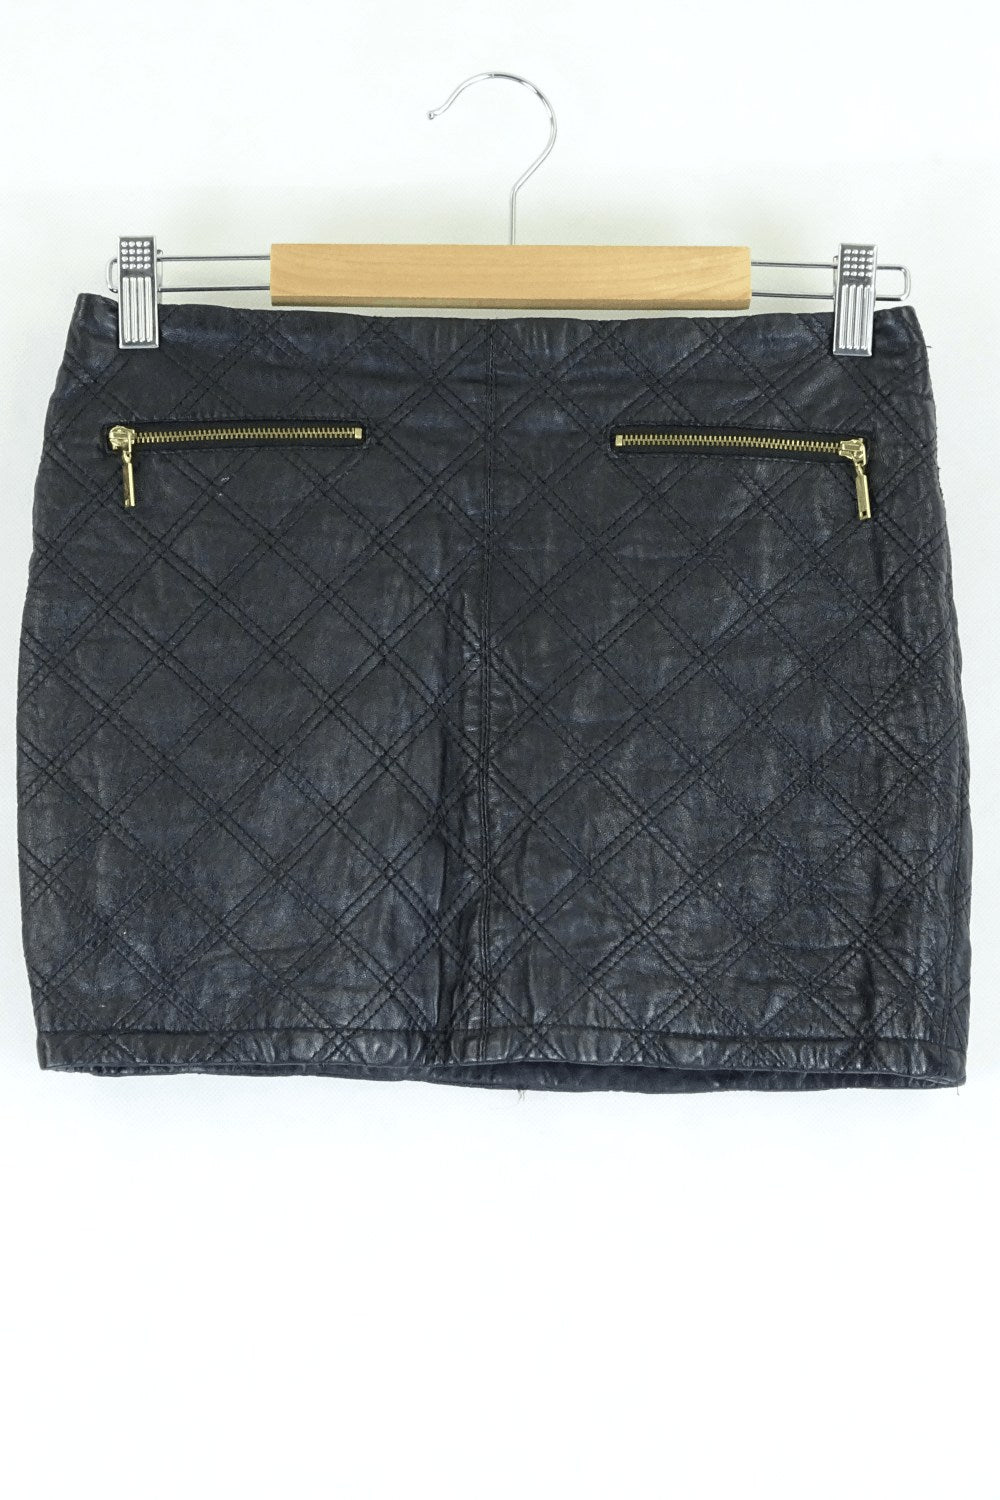 Zara Black Faux Leather Mini Skirt XS